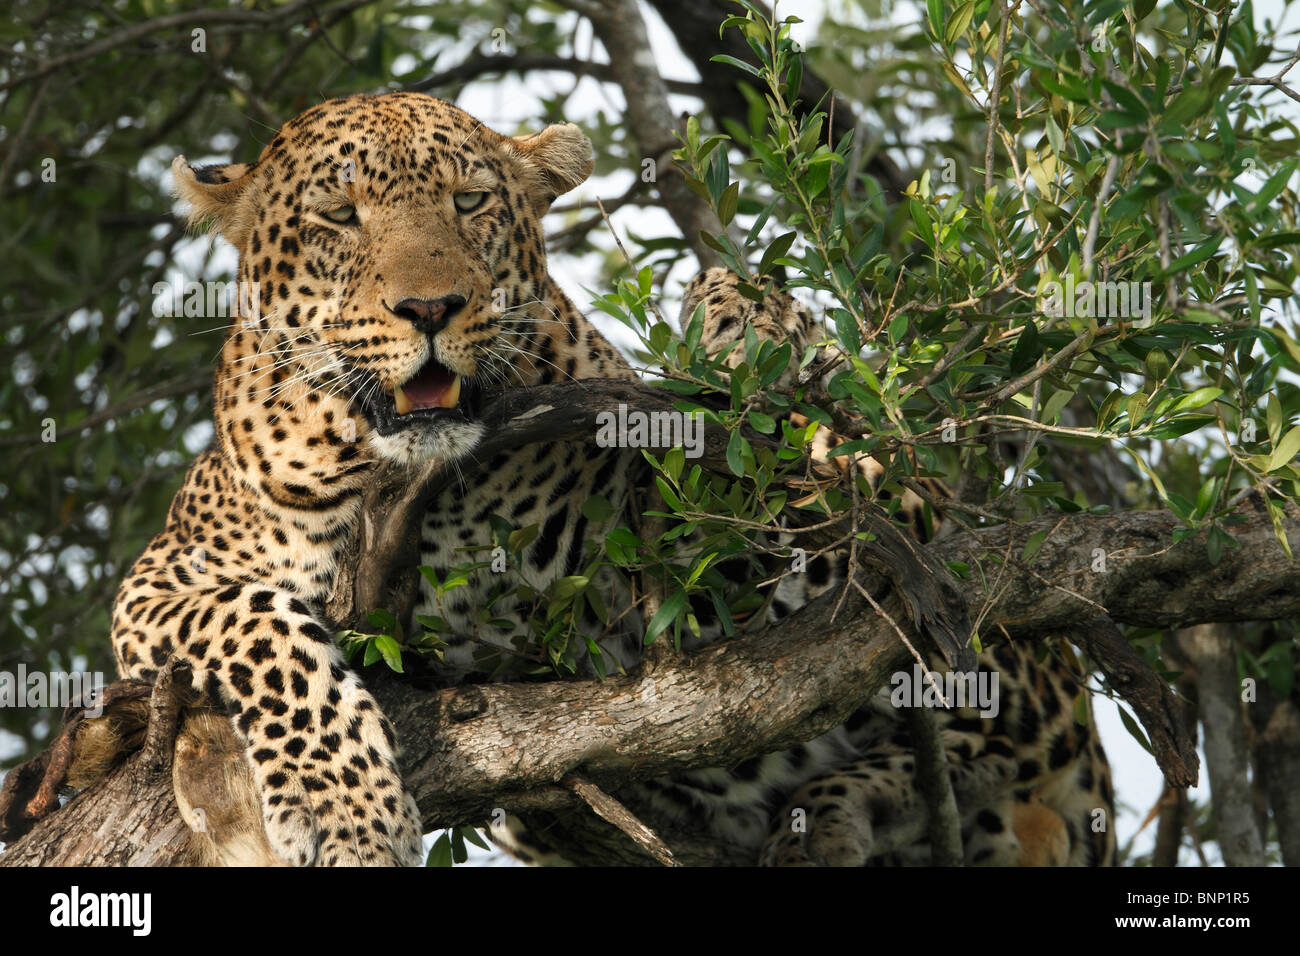 Leopard Gros plan sur un arbre, Masai Mara, Kenya Banque D'Images